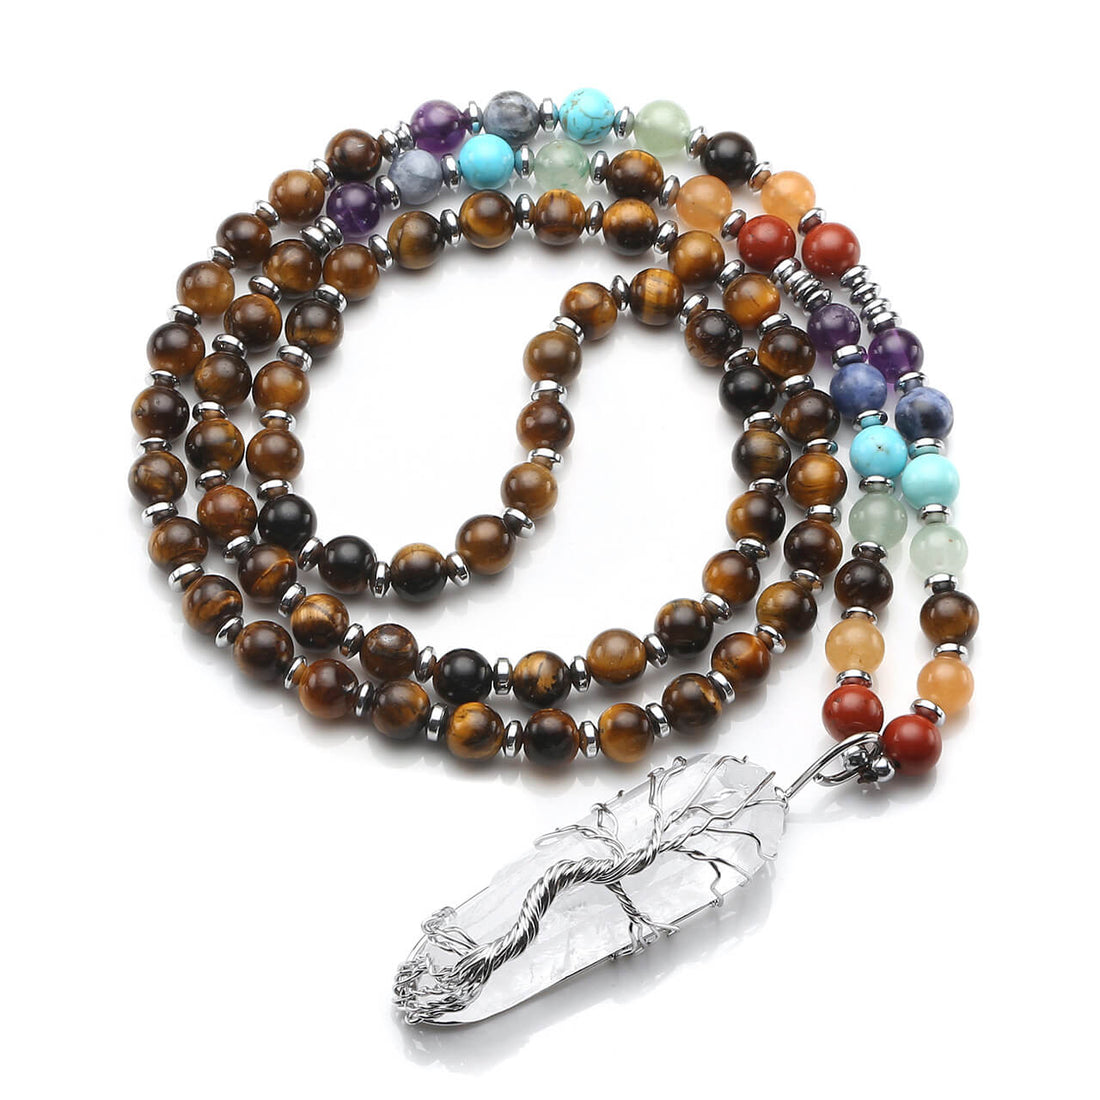 jovivi natural 7 chakras healing crystal necklace with clear quartz pendant, jjn07130